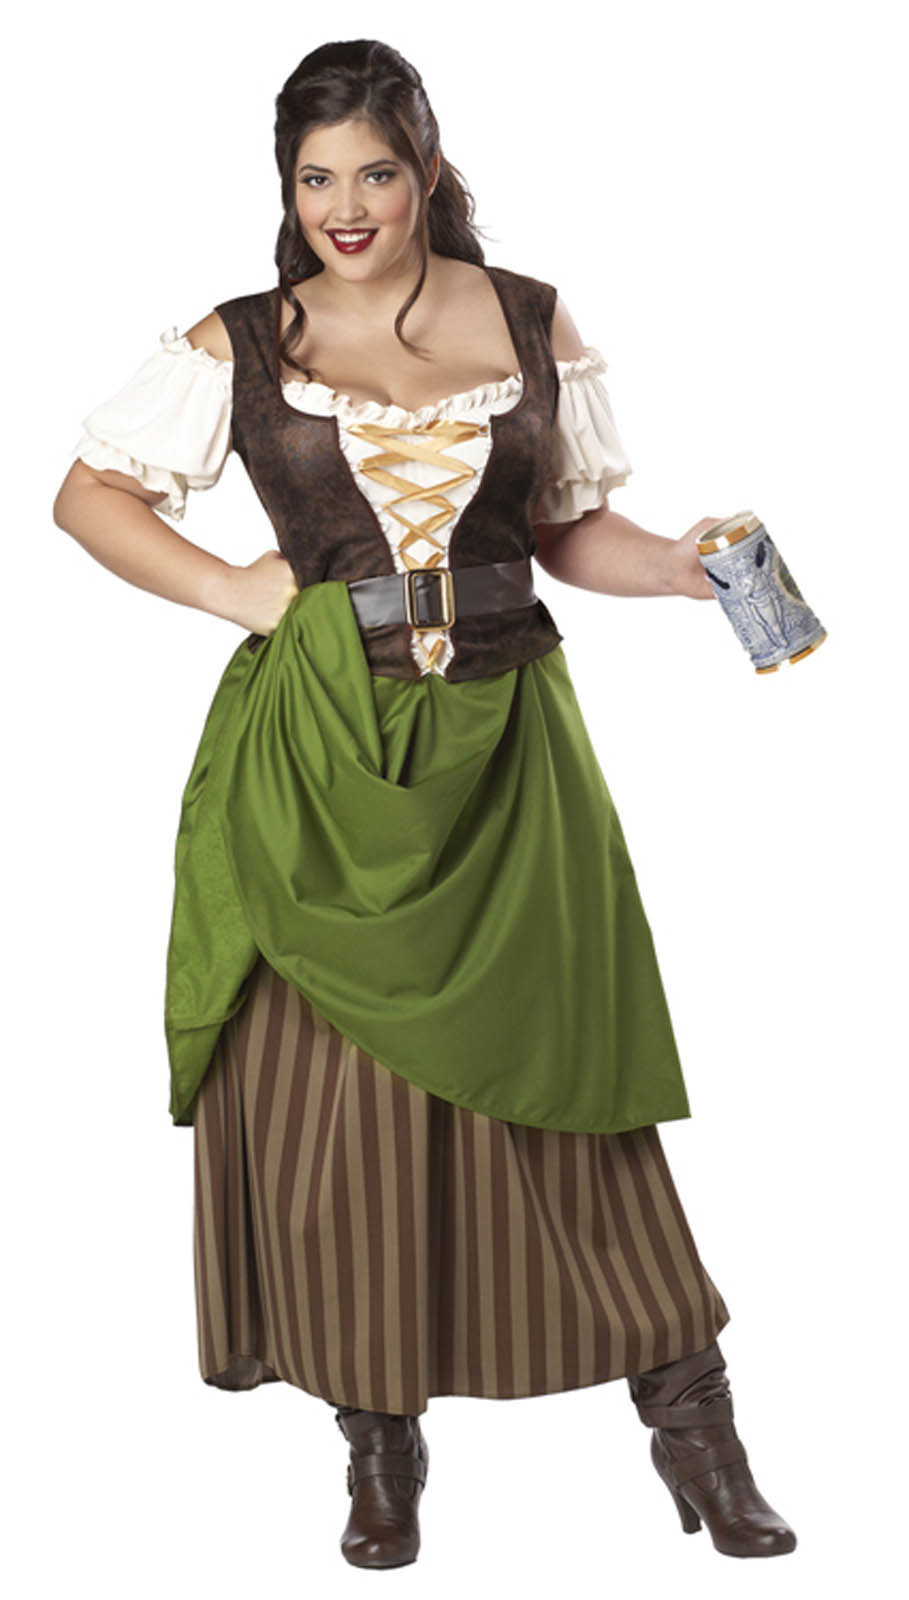 Renaissance Faire Costumes DIY
 Tavern Maiden Beer Wench PIRATE Adult Women s Renaissance